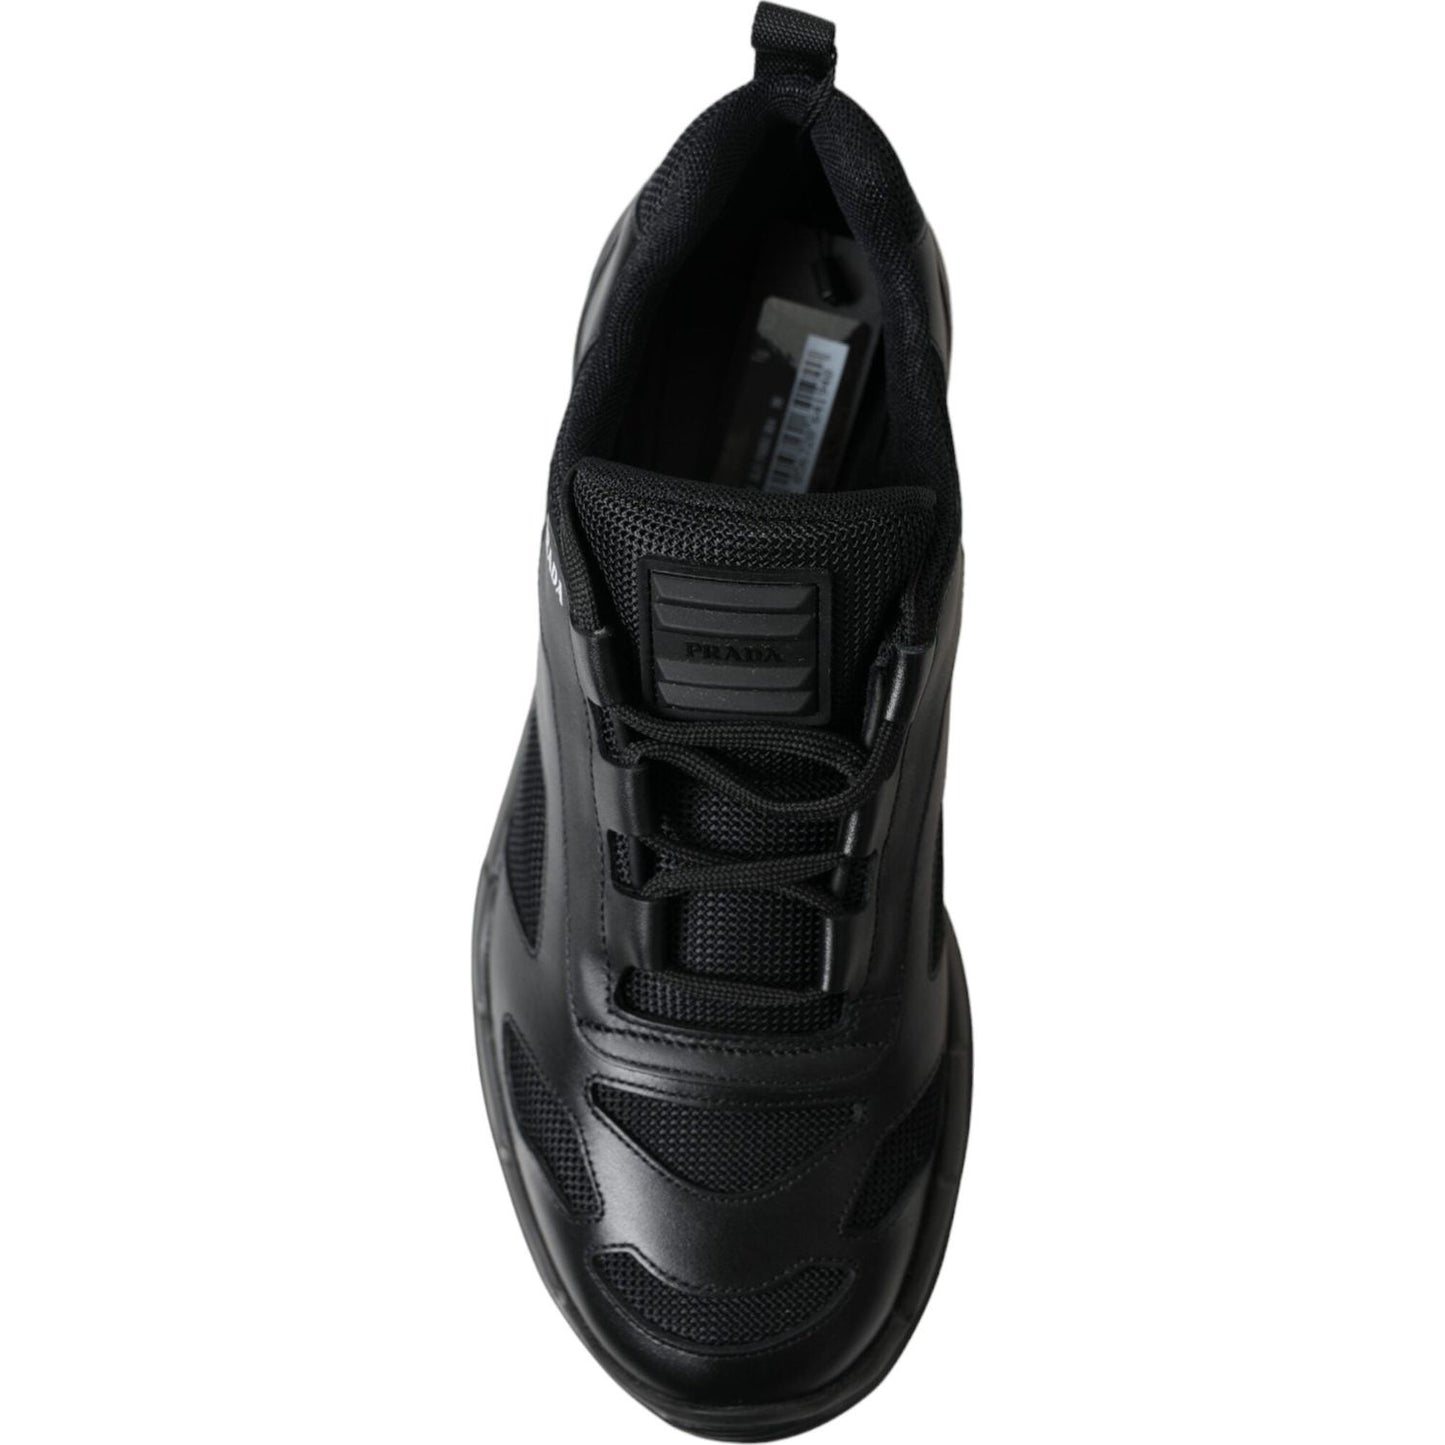 Prada Sleek Low Top Leather Sneakers in Timeless Black black-mesh-panel-low-top-twist-trainers-sneakers-shoes 465A4097-BG-scaled-1527cadd-bd8.jpg